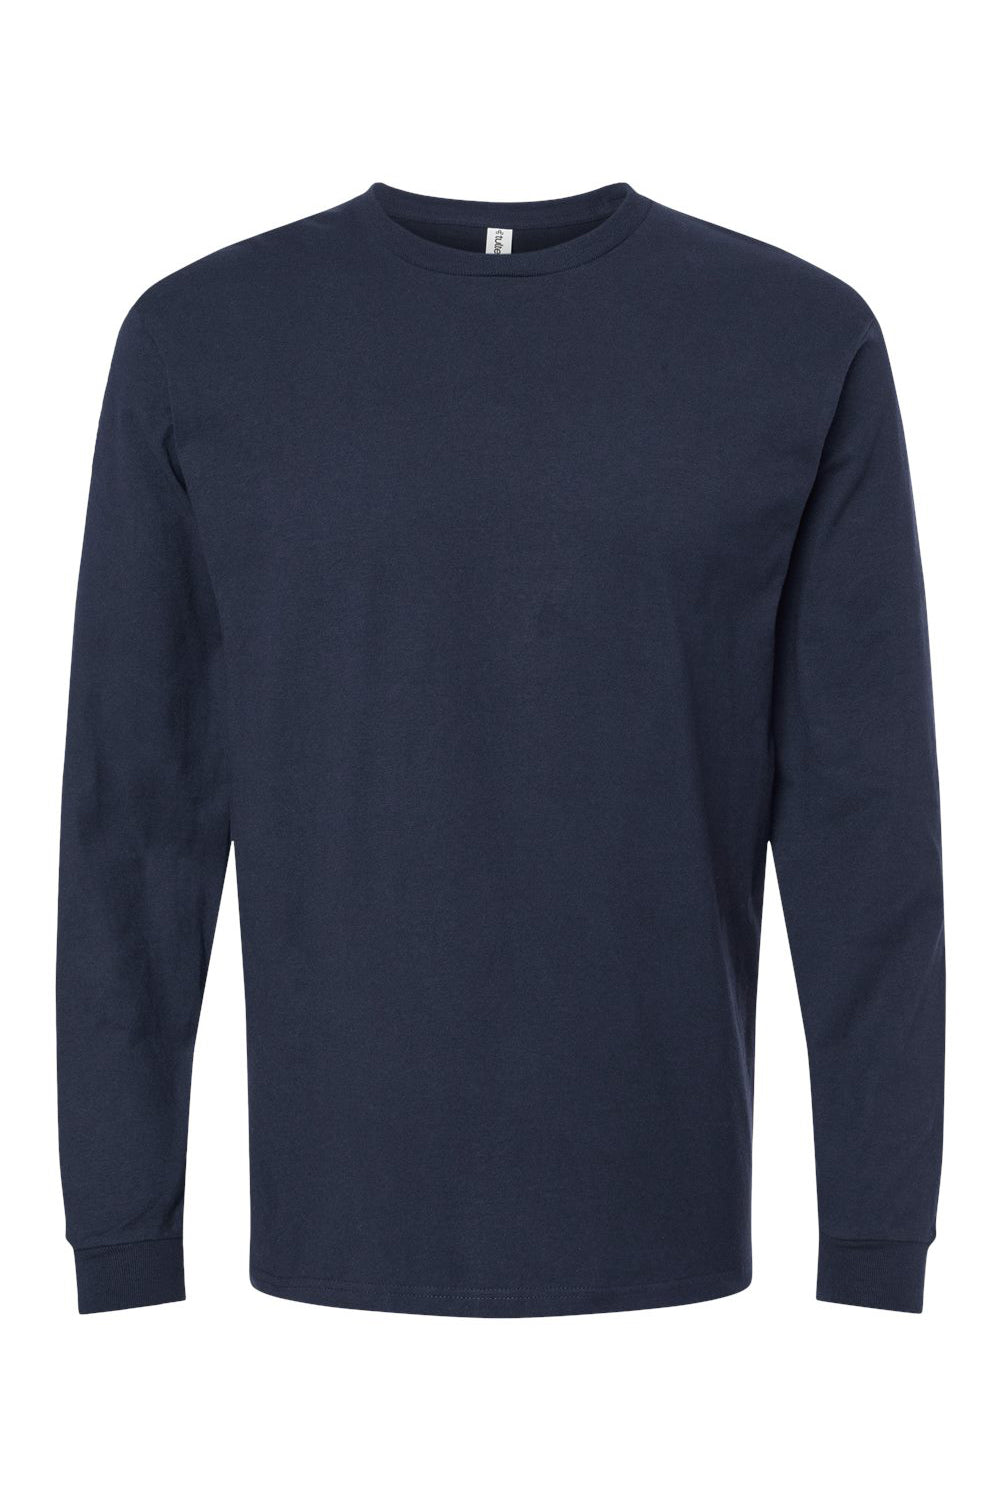 Tultex 291 Mens Jersey Long Sleeve Crewneck T-Shirt Navy Blue Flat Front